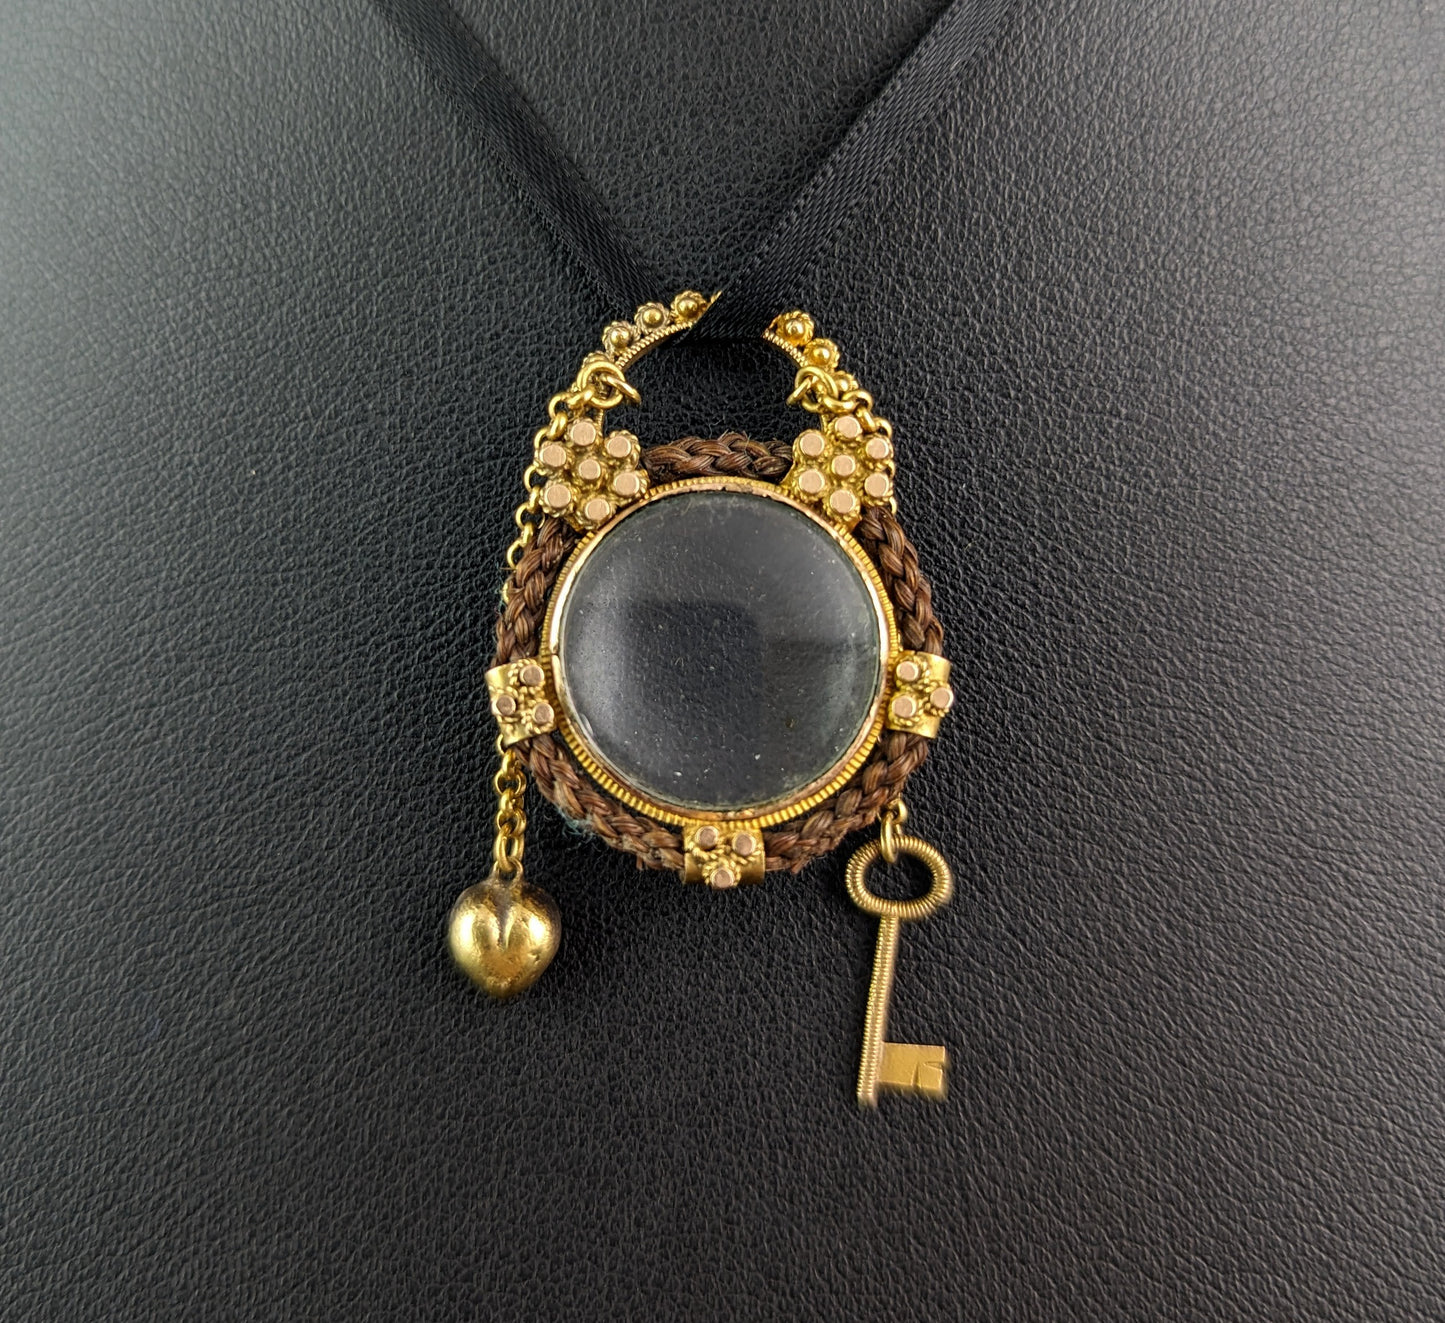 Antique Georgian Key to my Heart mourning locket, 18ct gold and Hairwork, Padlock